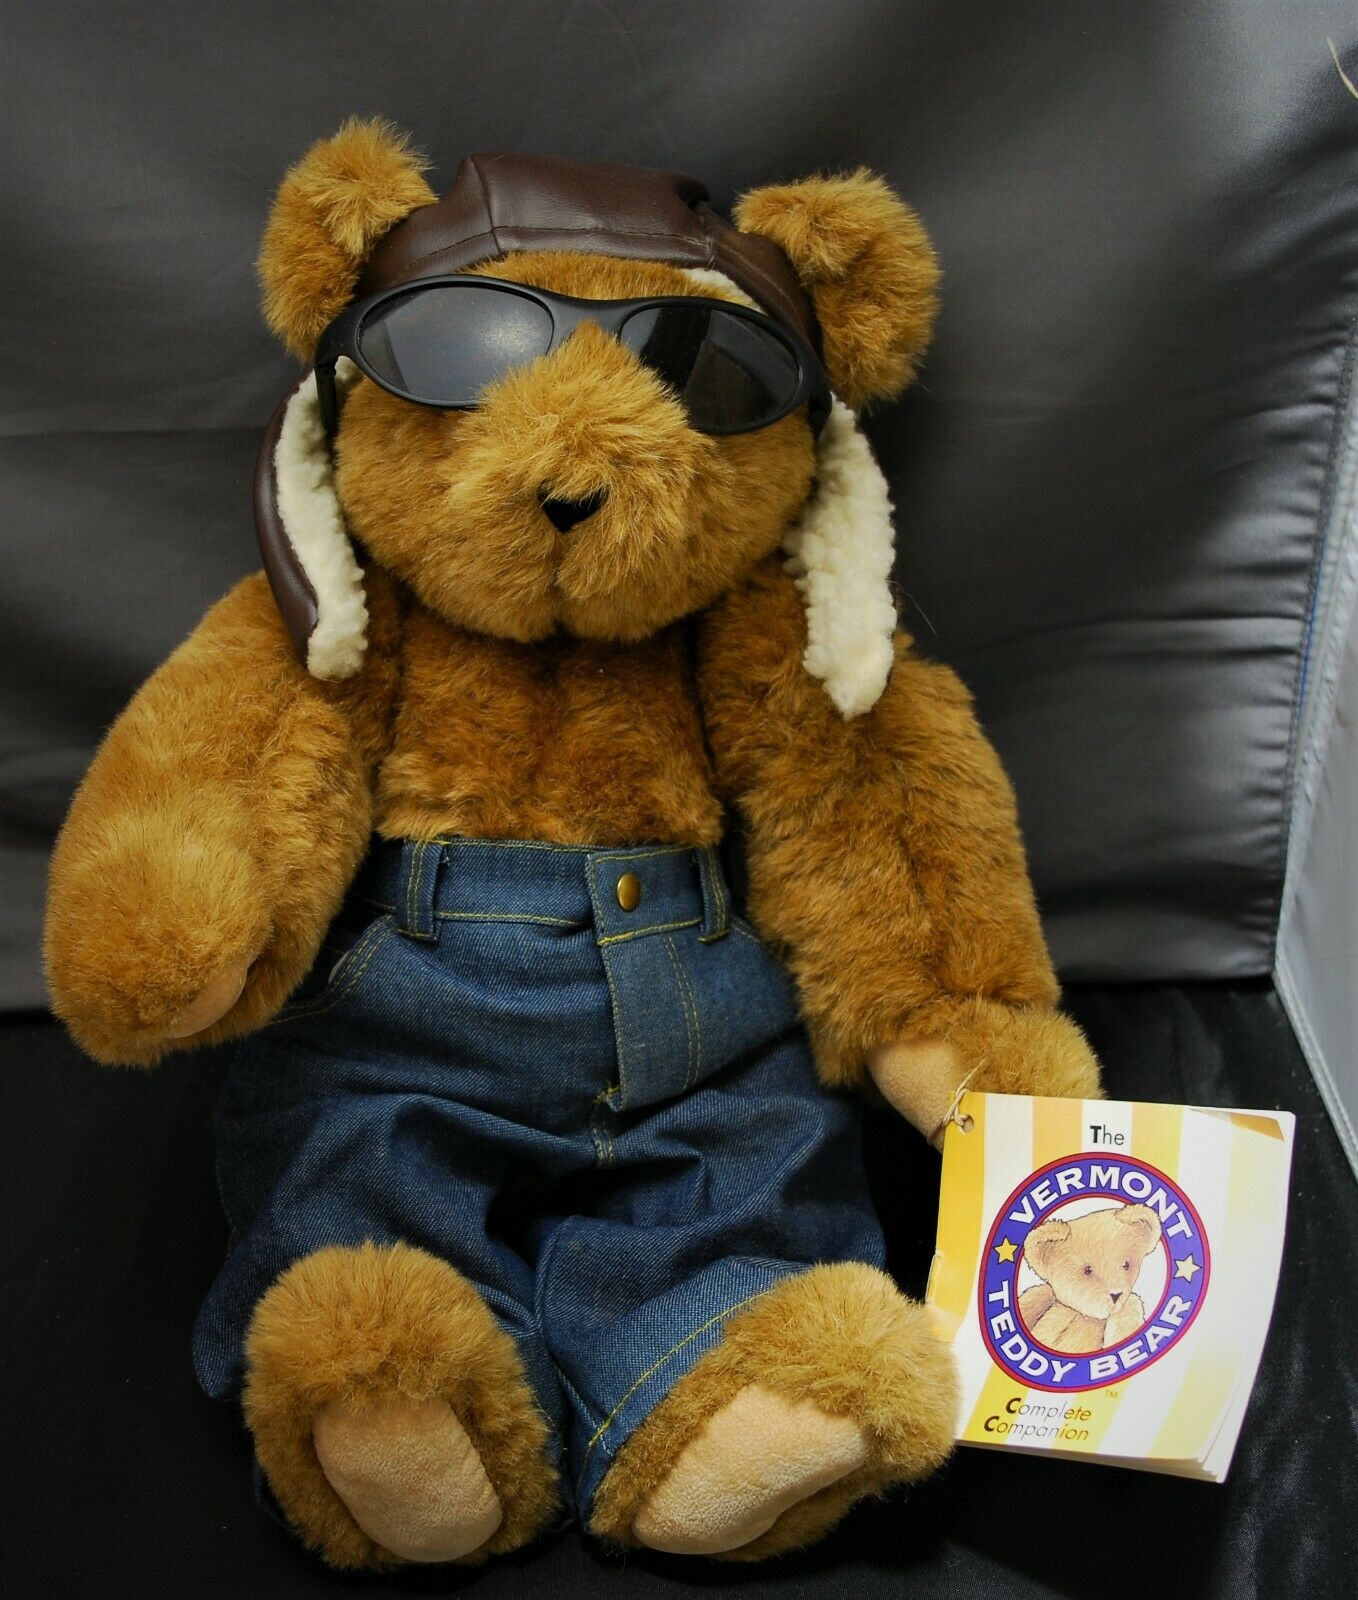 Vermont Teddy Bear With Sunglasses, Cap & Tattoo "mom Heart" On Arm - Bnwt